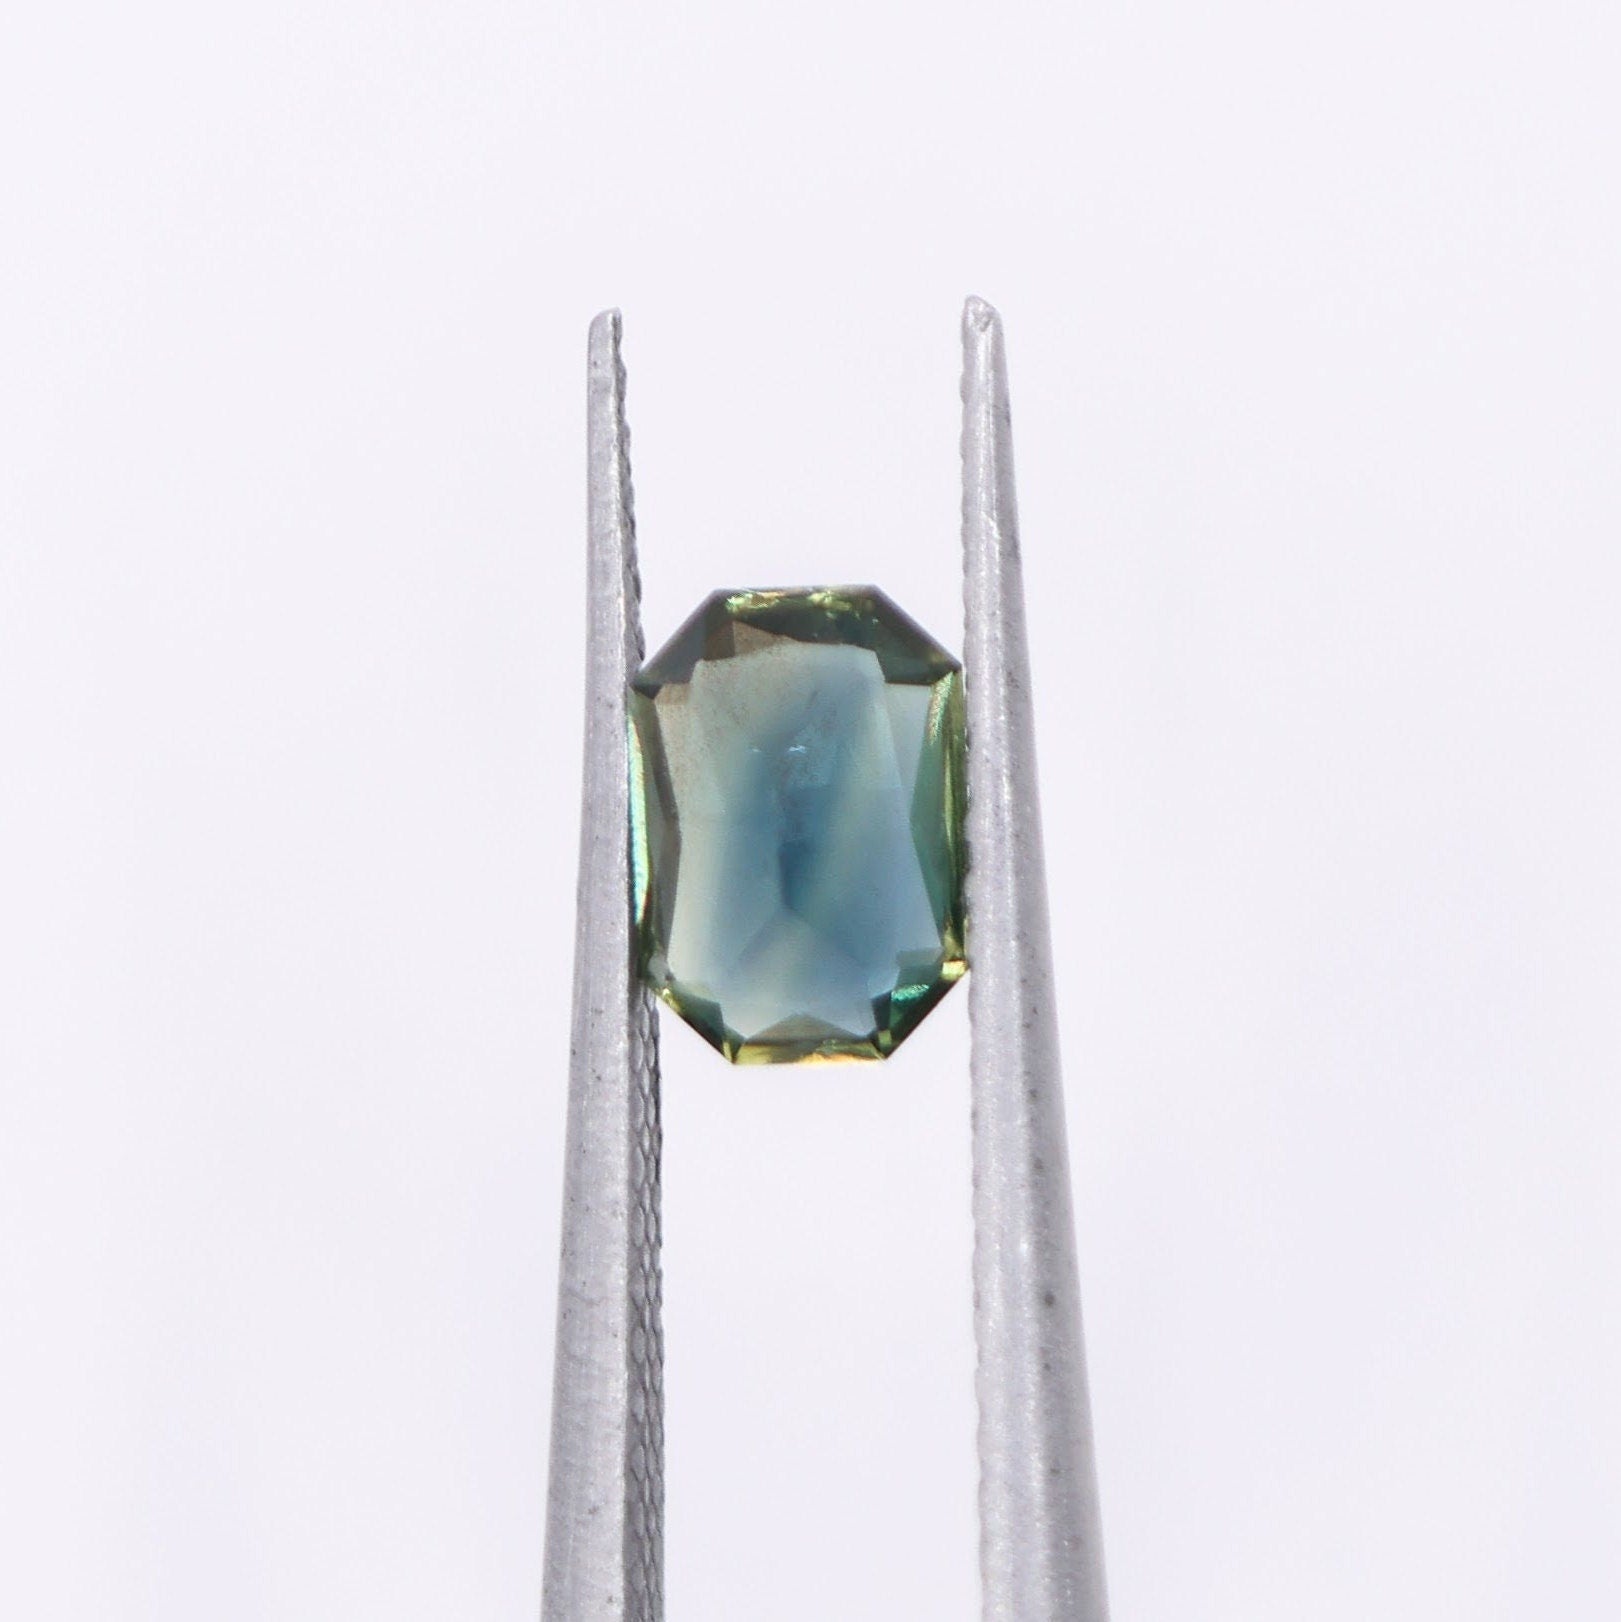 Gemstones-Peacock Sapphire Loose Gemstones | Heated Sapphires | Emerald Cut 7x5mm | September Birthstone | Jewelry Stone Setting | Teal Gemstone | - NNJGemstones